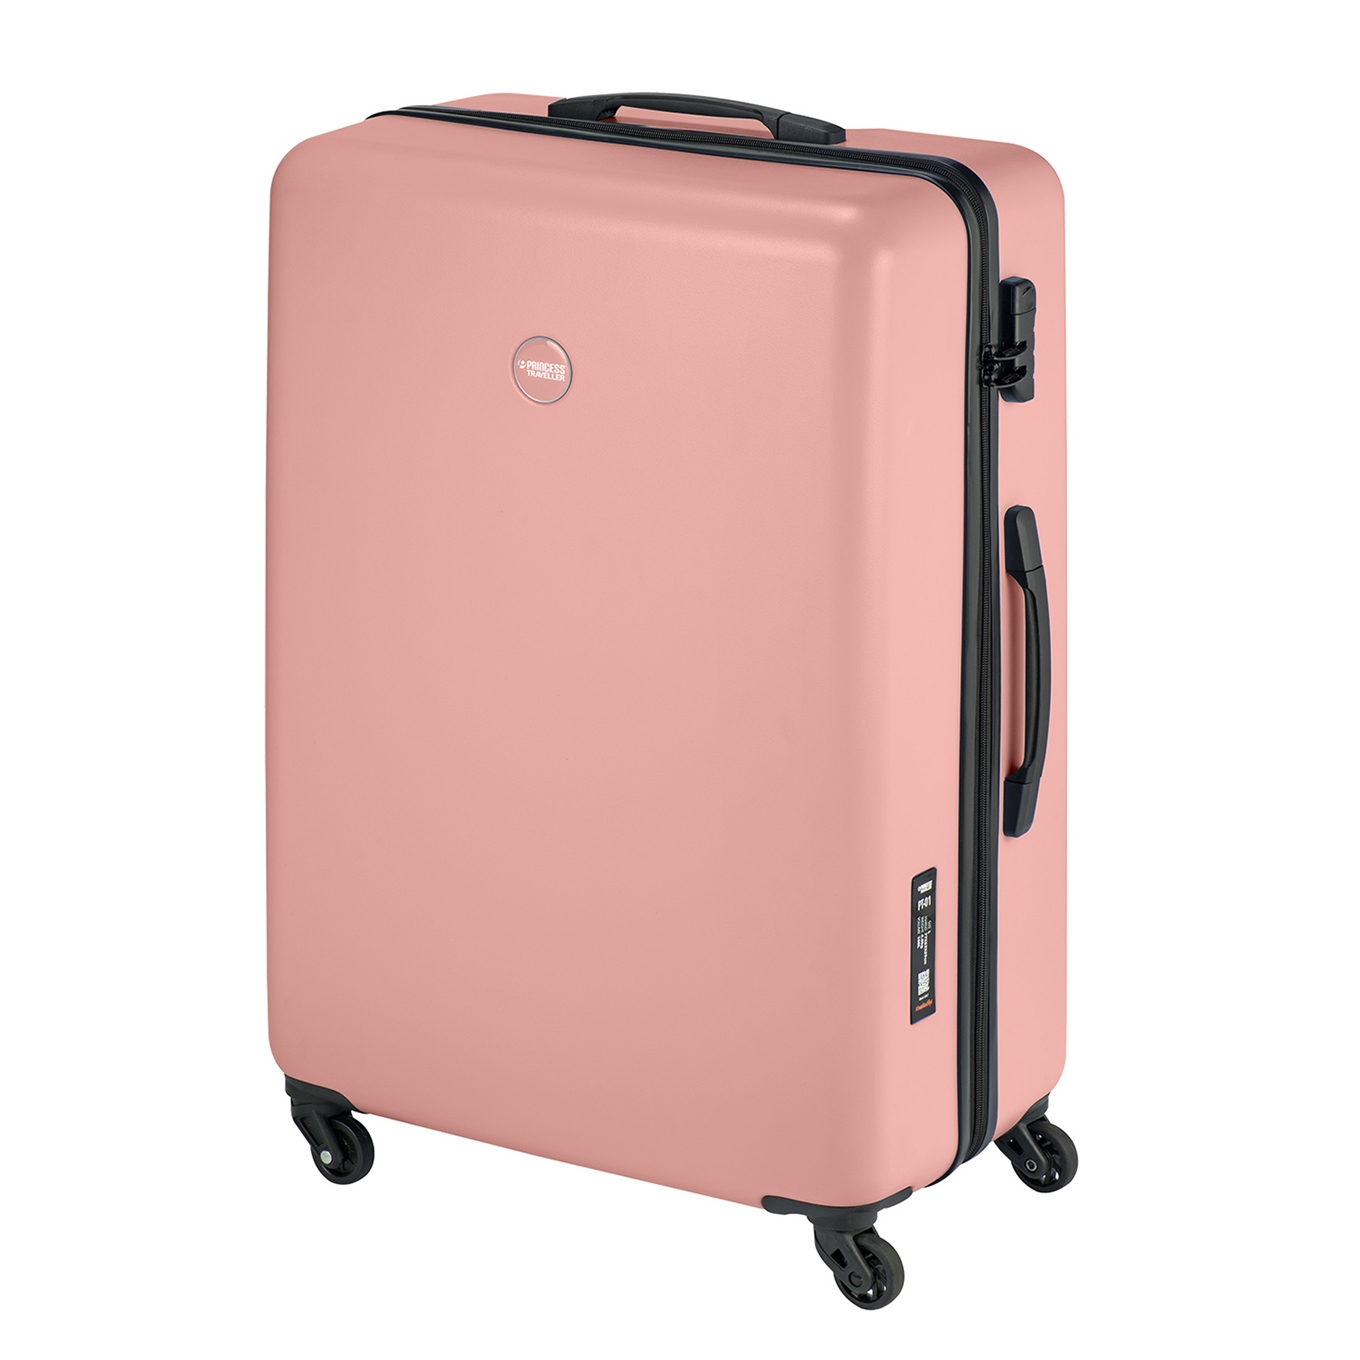 Blaze toevoegen aan medeleerling Princess Traveller PT-01 Large Trolley peony pink | Travelbags.be